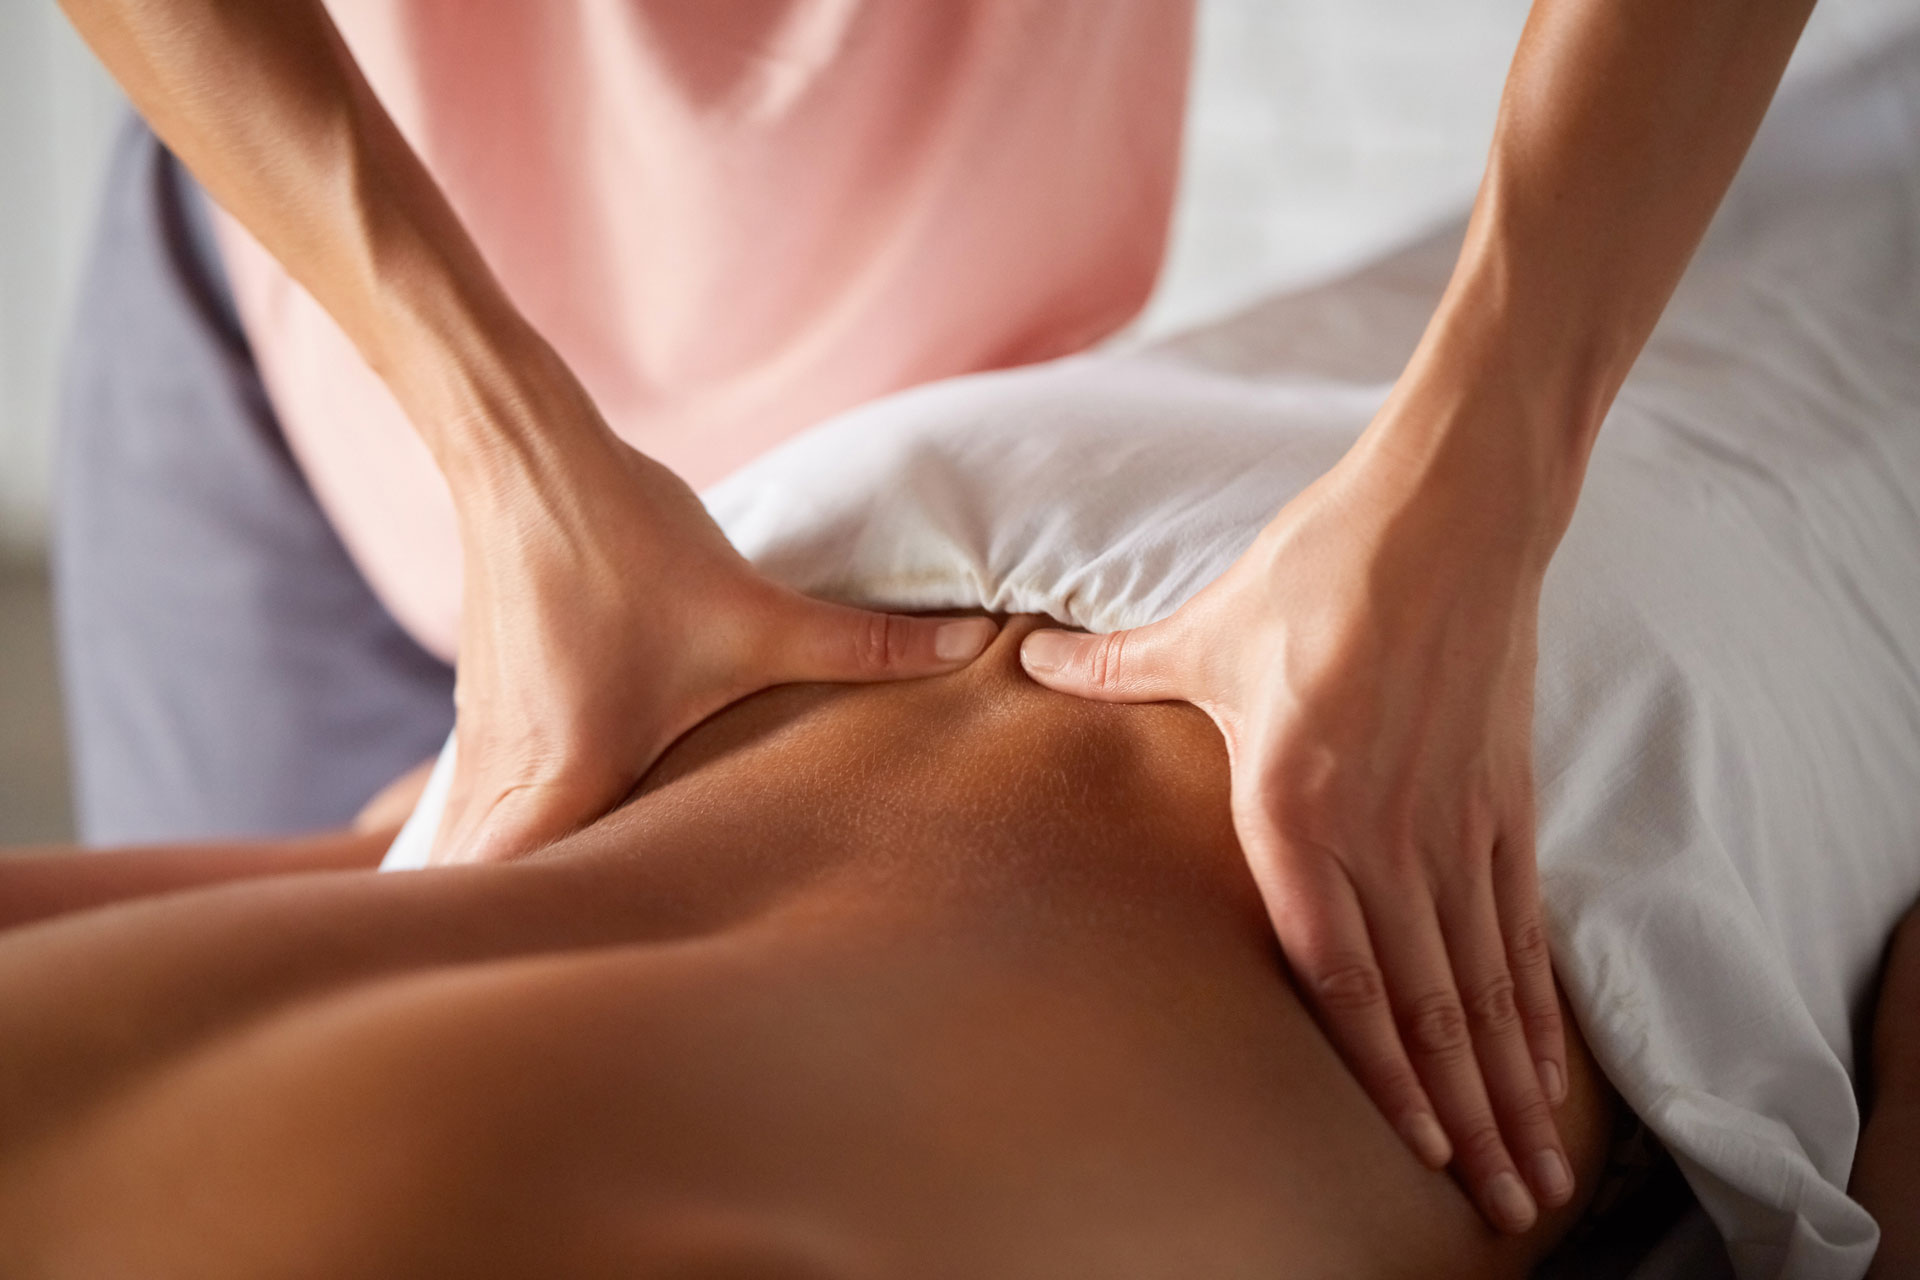 masseuse-doing-massage-for-male-client-K8NDMZ2.jpg